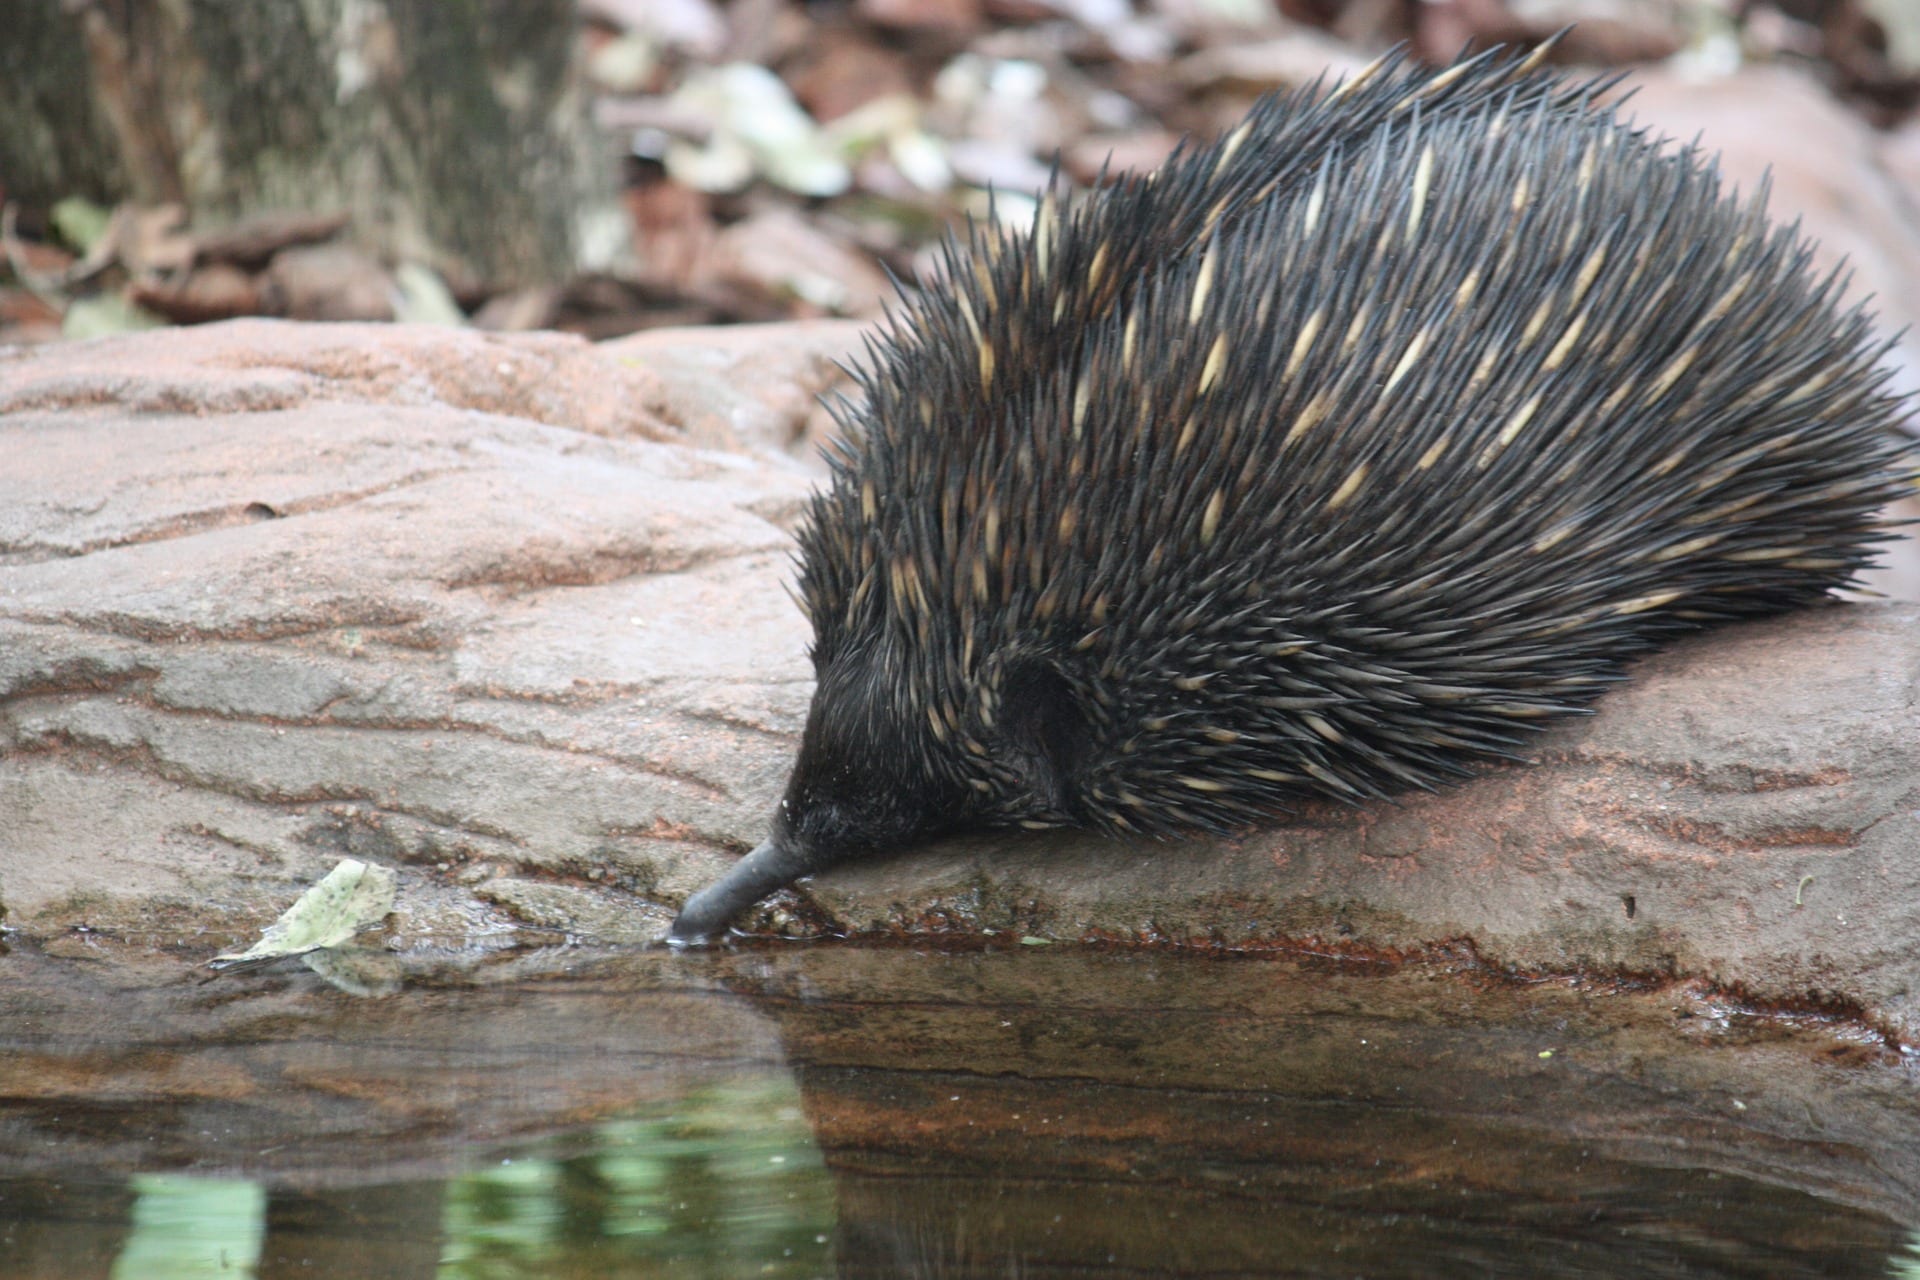 https://pixabay.com/en/echidna-australia-wildlife-spikes-950006/